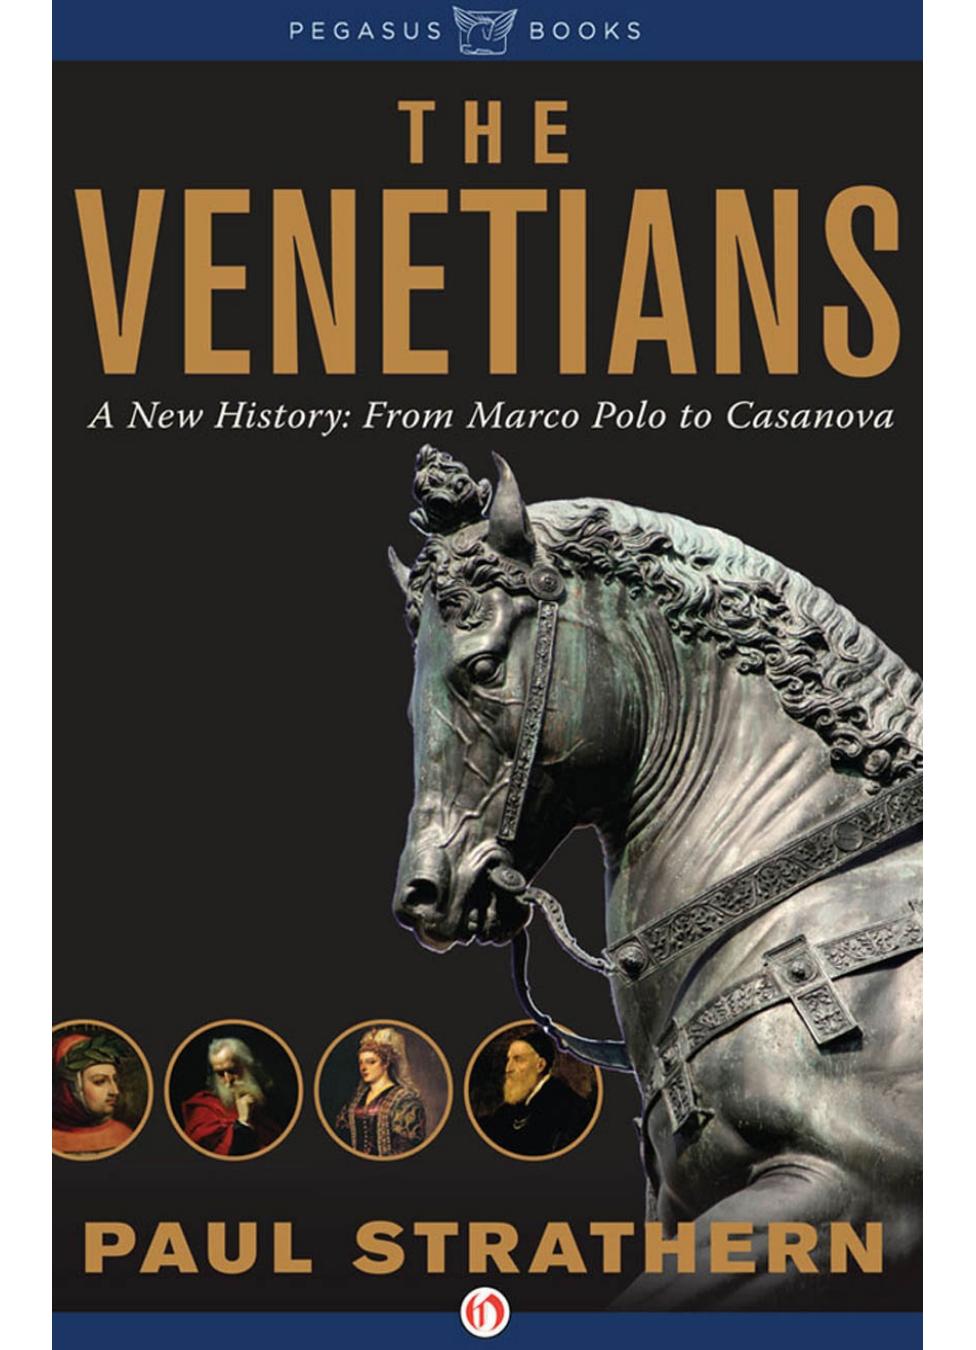 Venetians by Paul Strathern